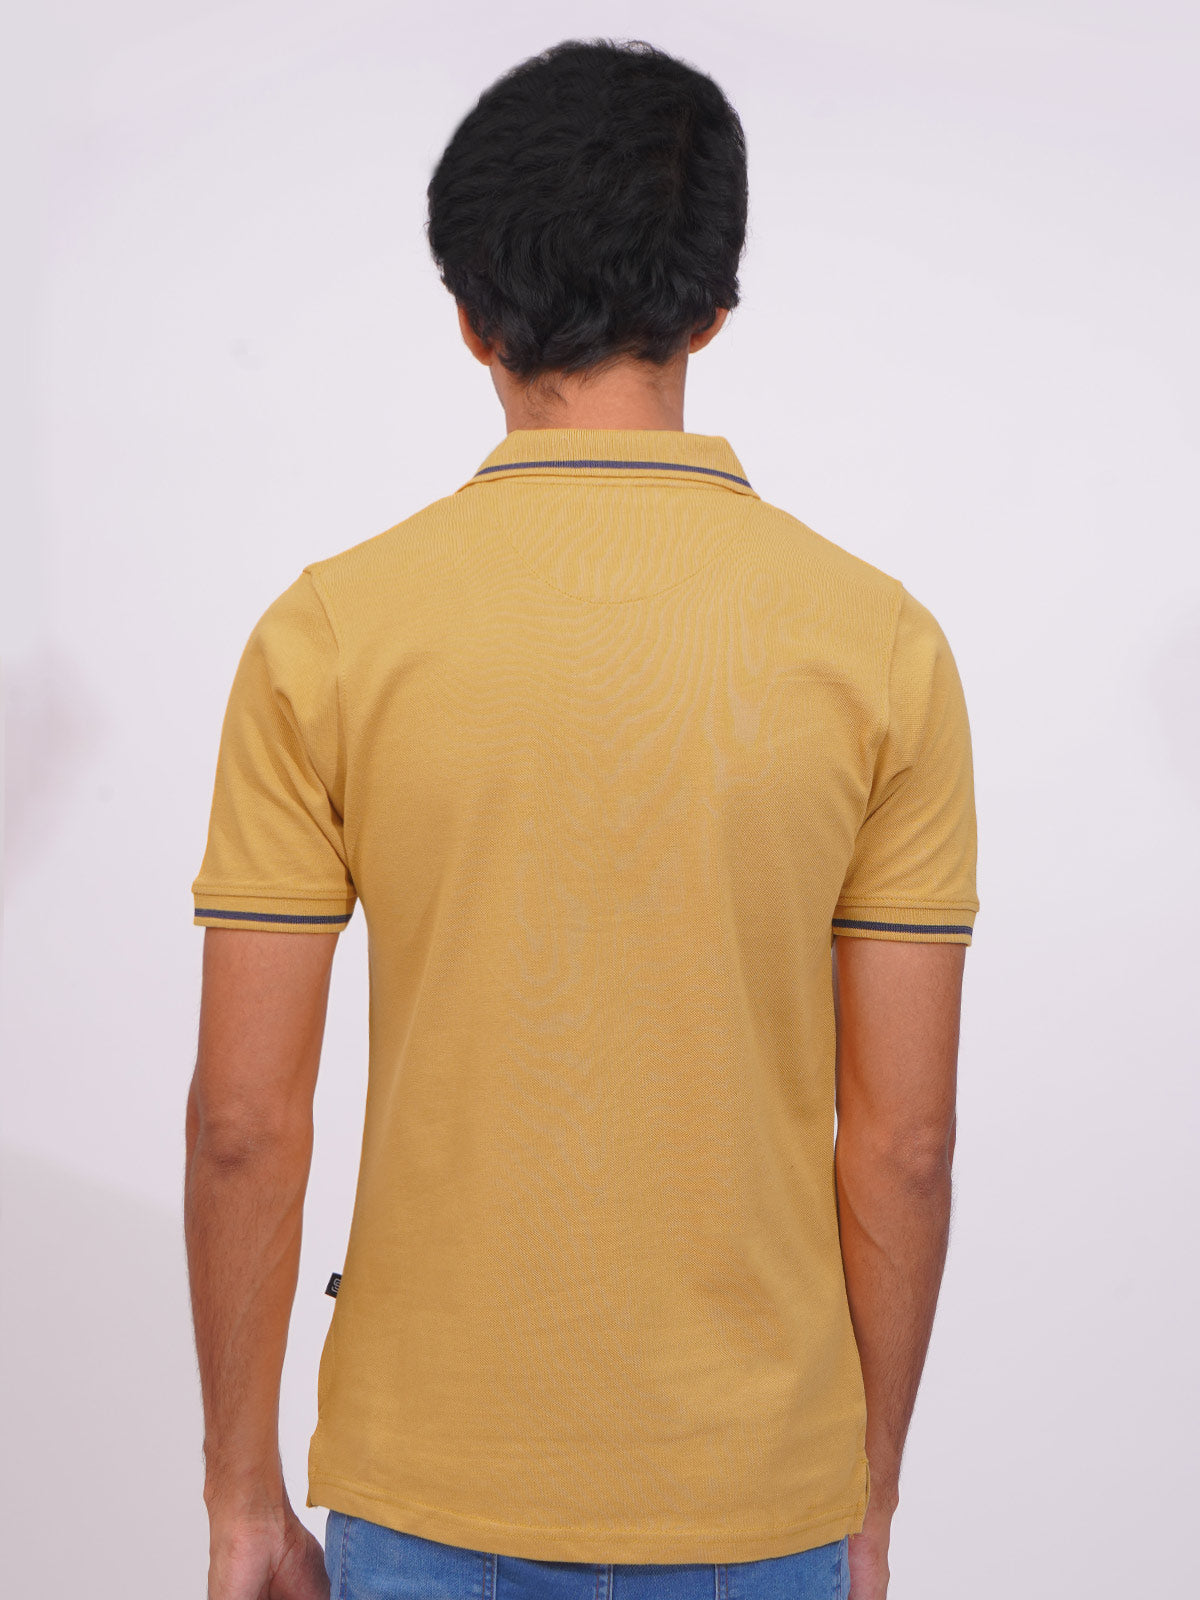 Honey Gold Classic Half Sleeves Cotton Polo T-Shirt (POLO-652)